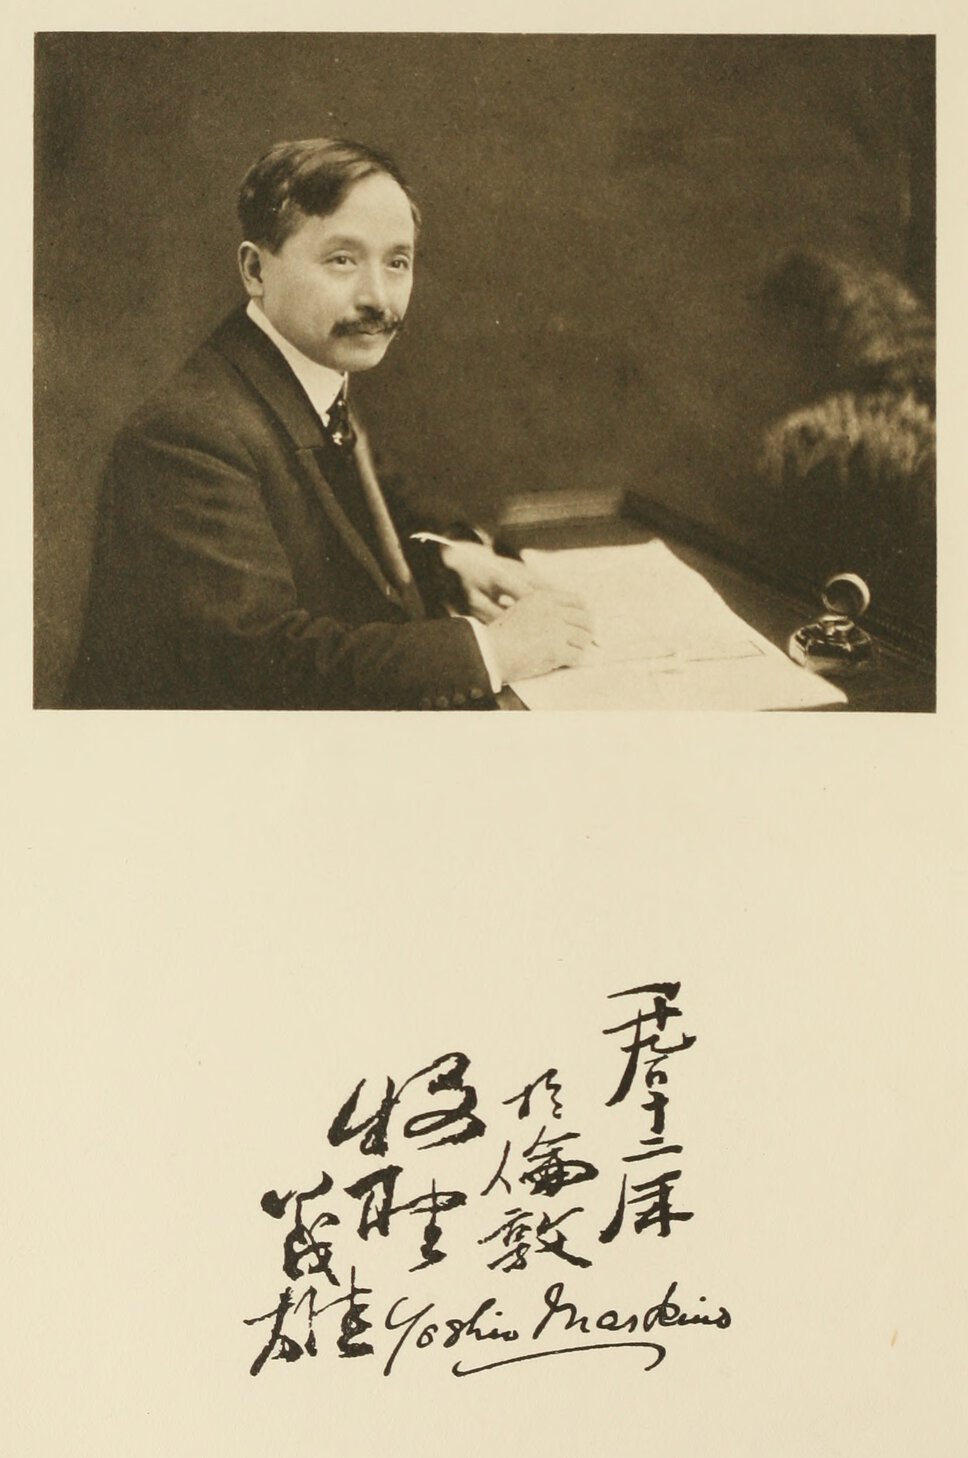 Yoshio Markino seated at desk in half profile and facing forward.